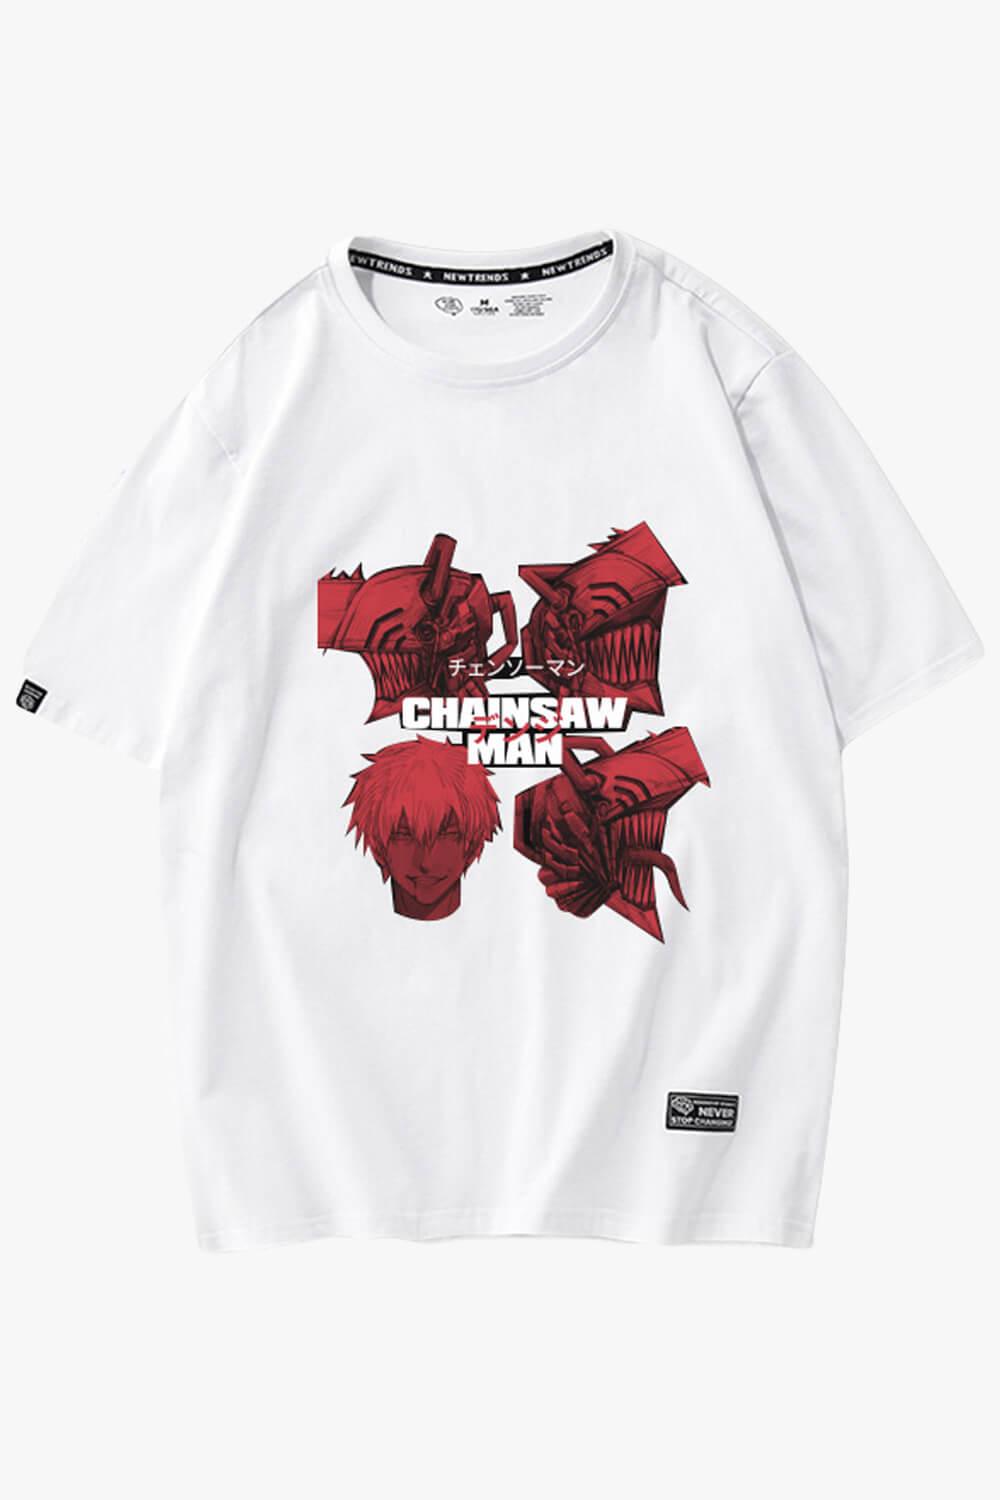 Chainsaw Man Denji Heads Manga T-Shirt - Aesthetic Clothes Shop